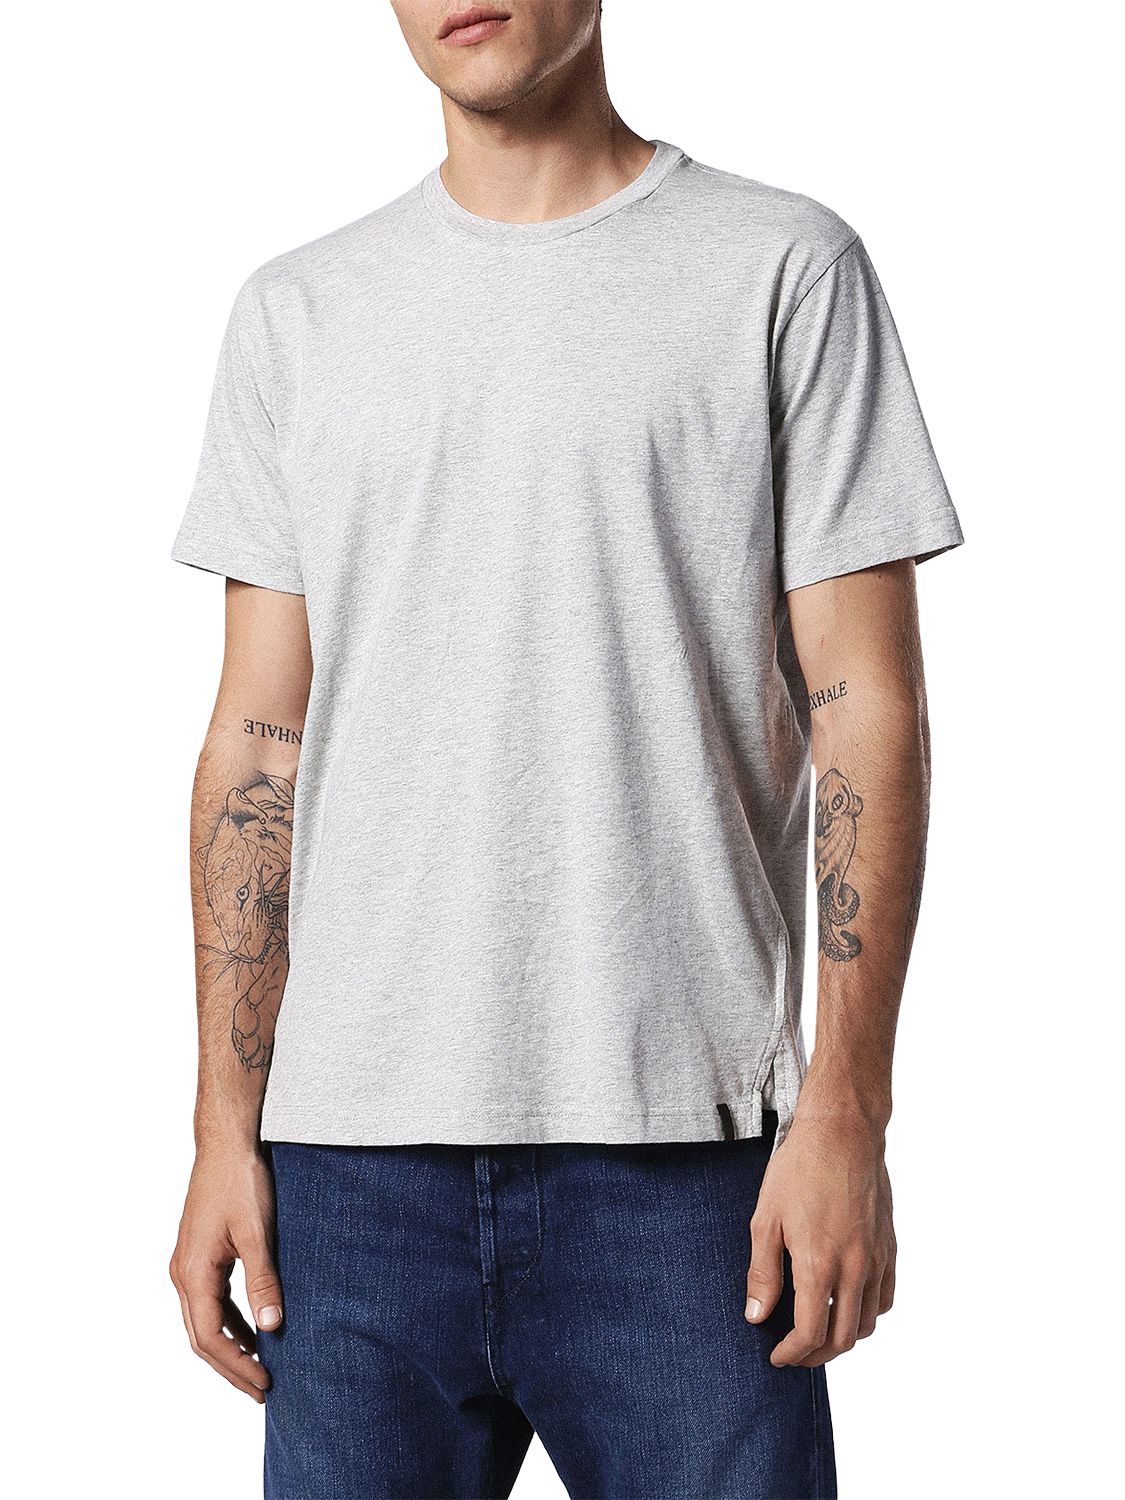 Diesel Daniel Plain Cotton T-Shirt, Grey